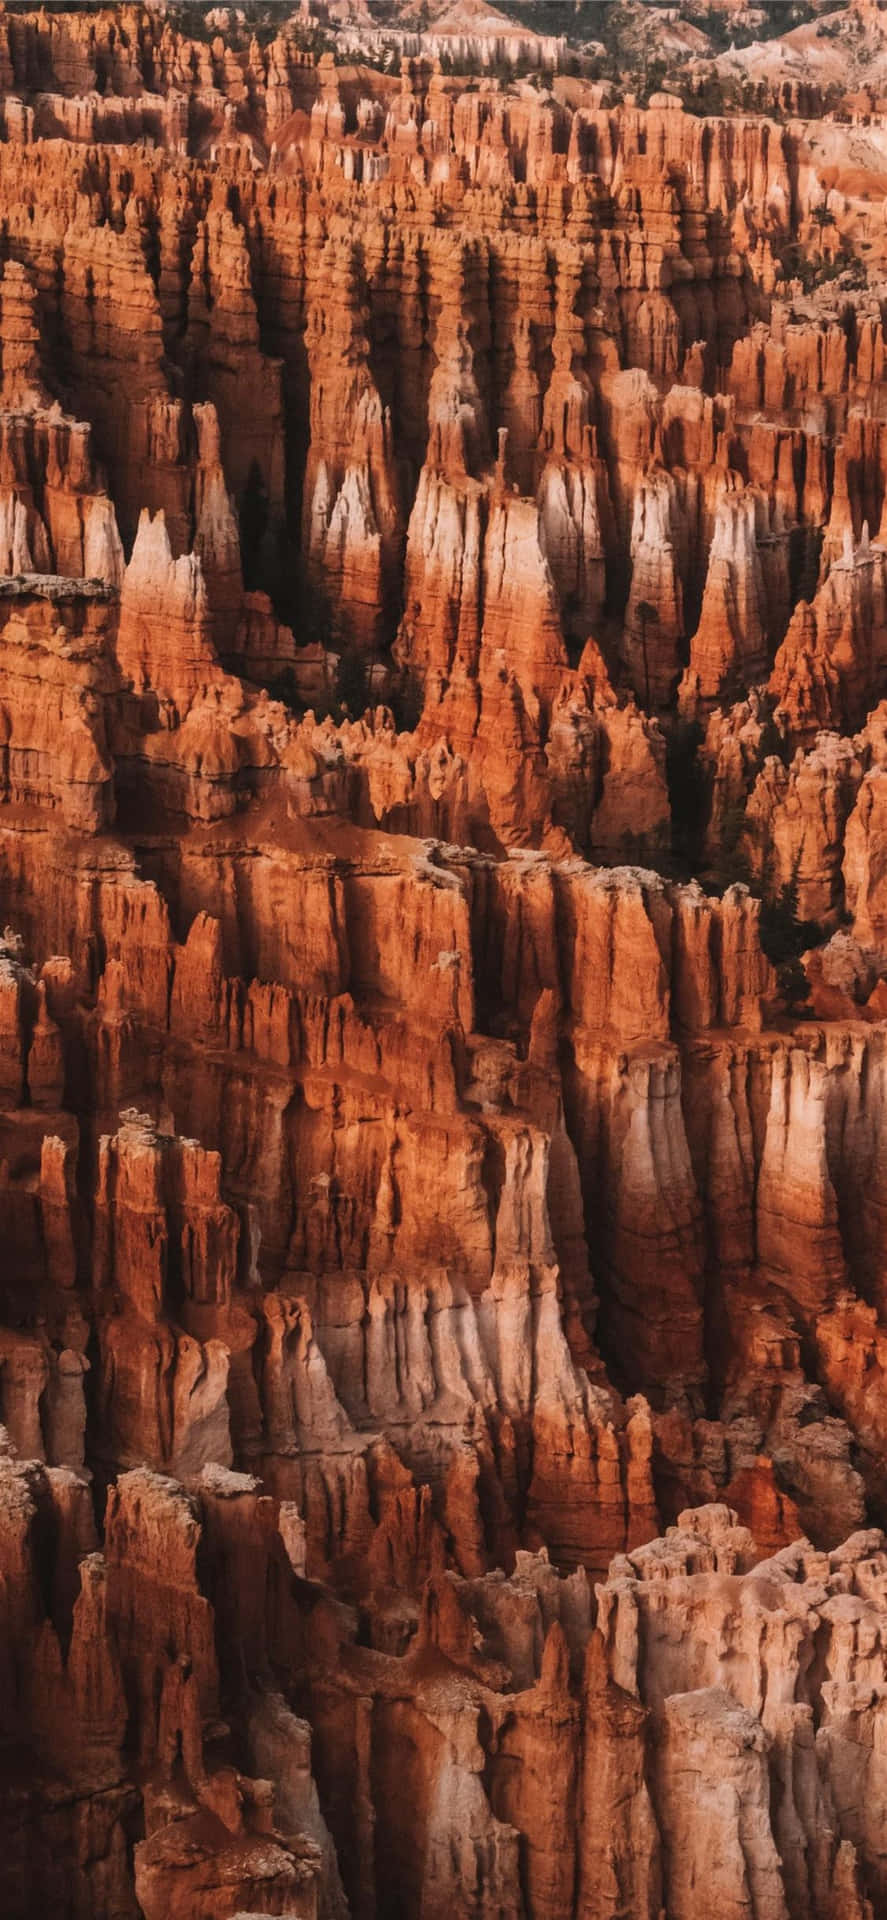 Brycecanyon National Park - Karmesinrote Spitzfelsen-formationen. Wallpaper